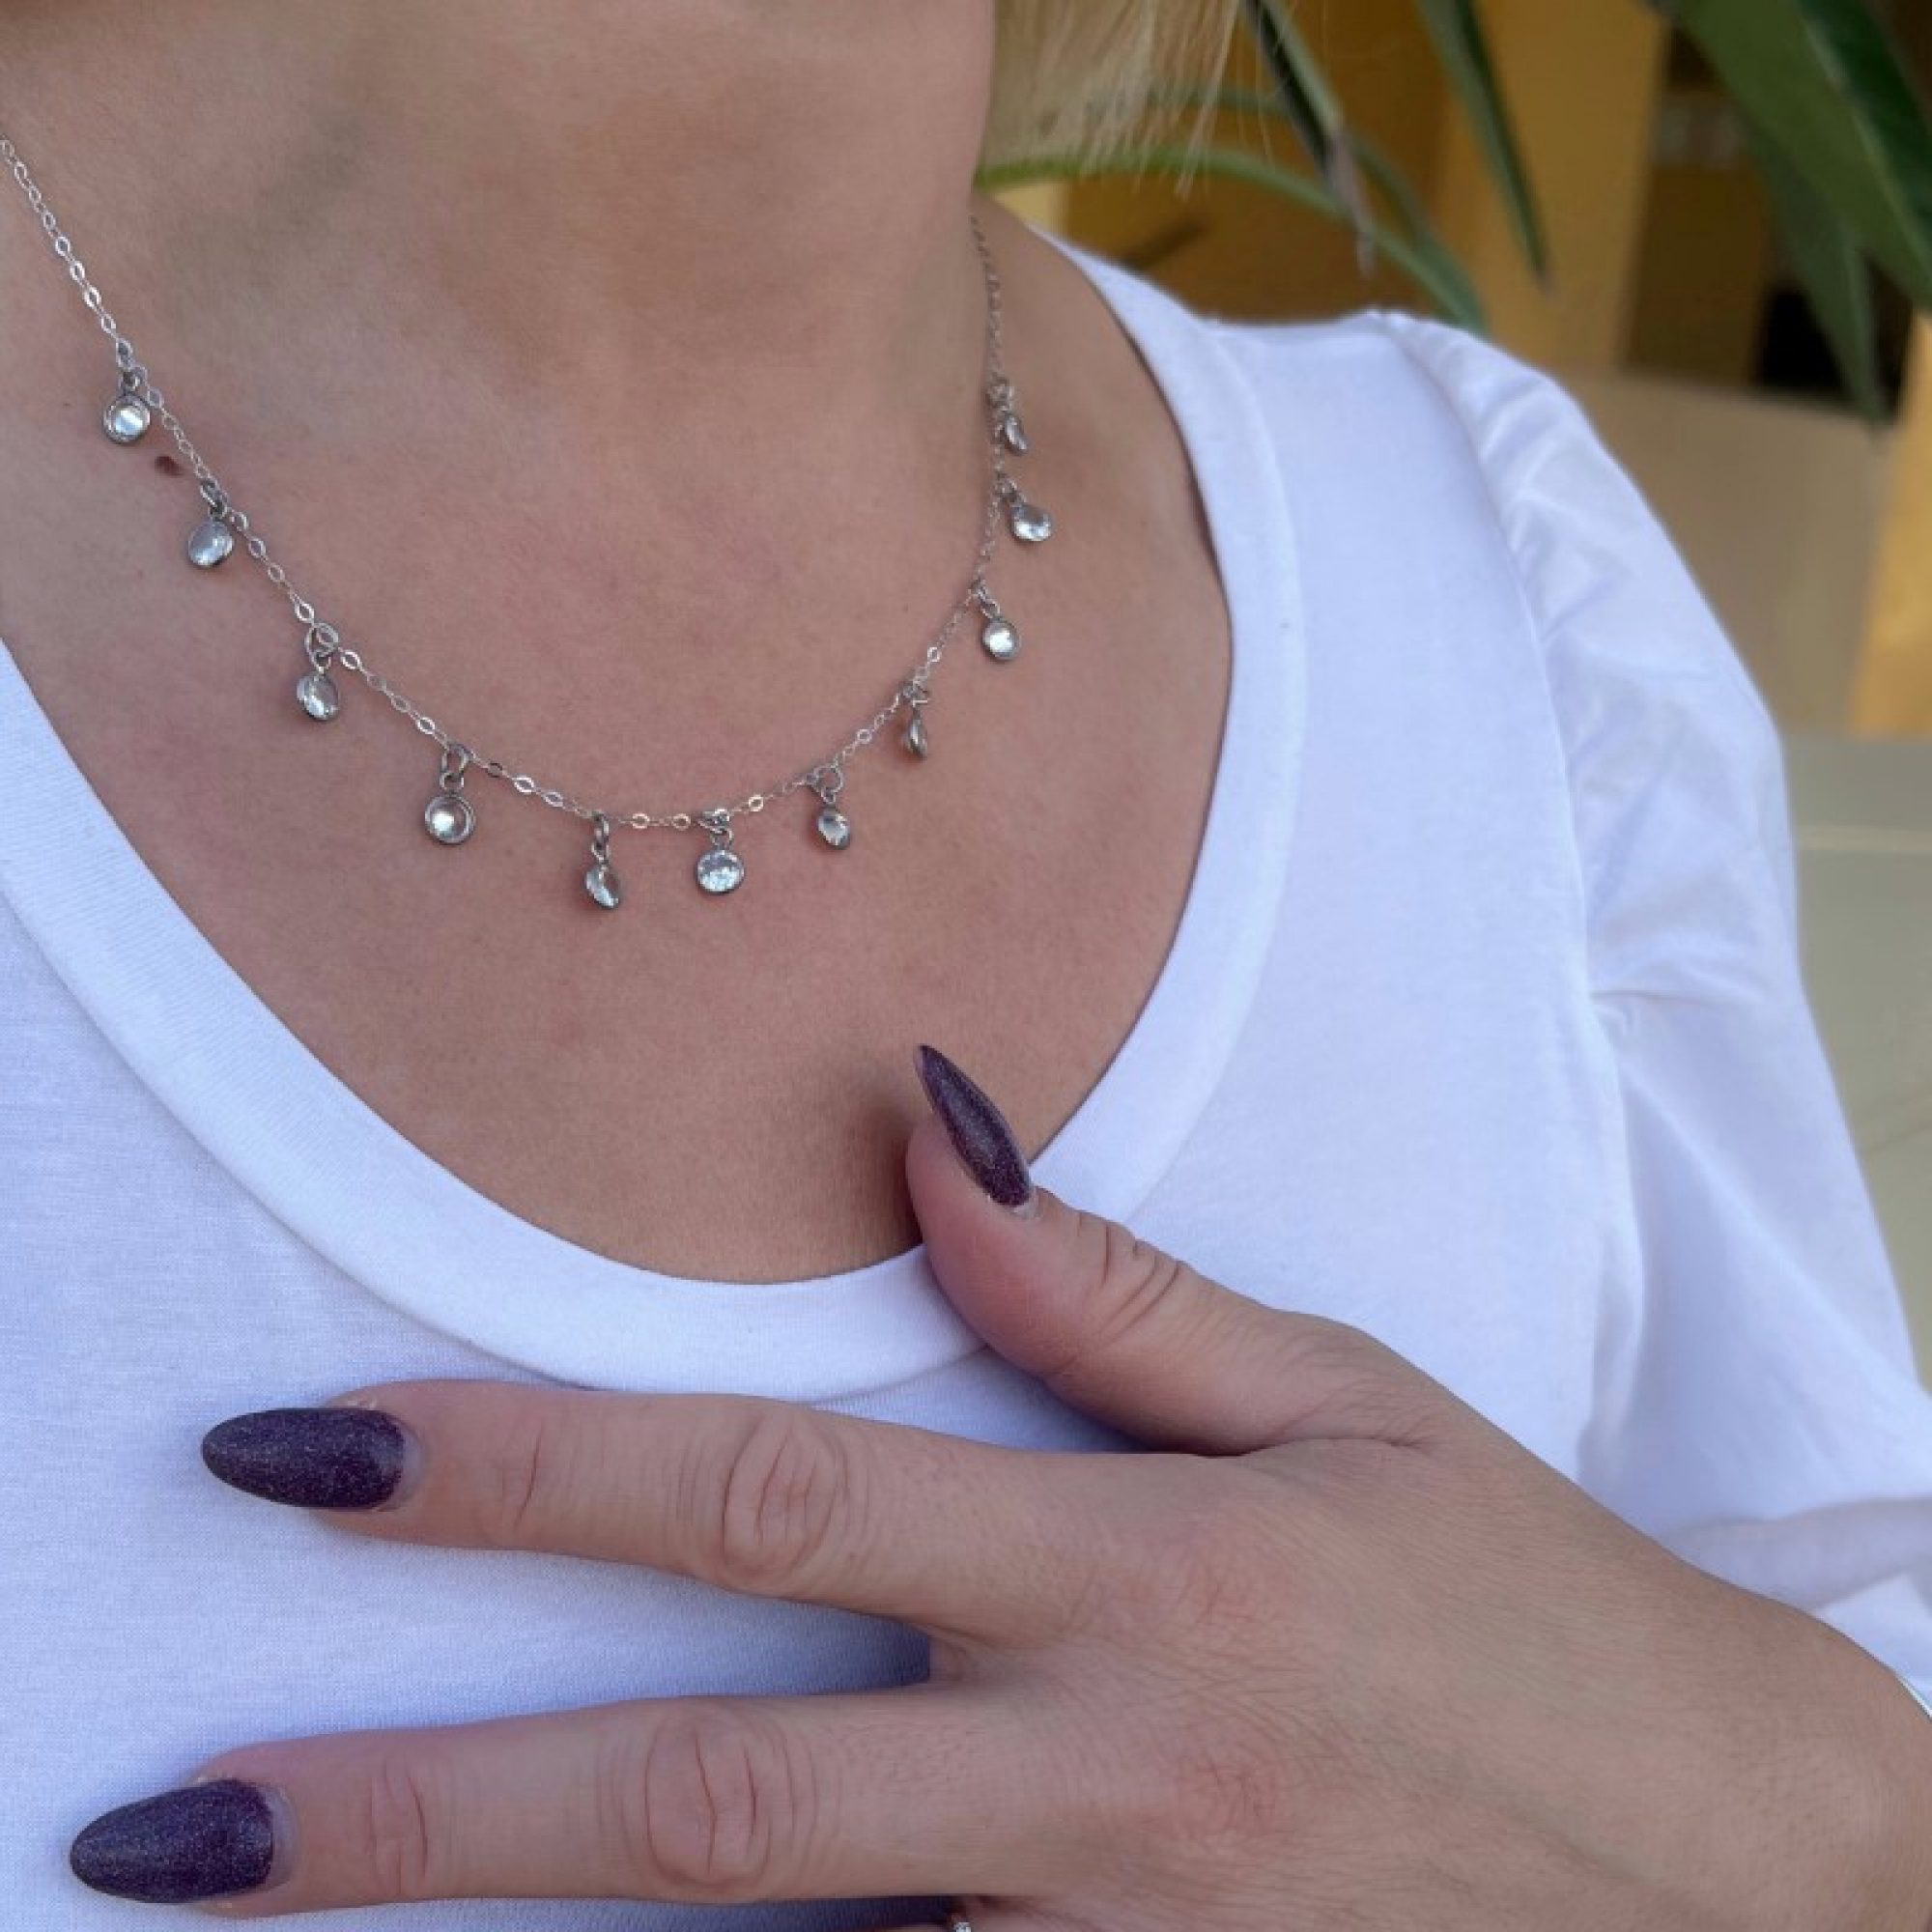 Dangle necklace with zircon stones